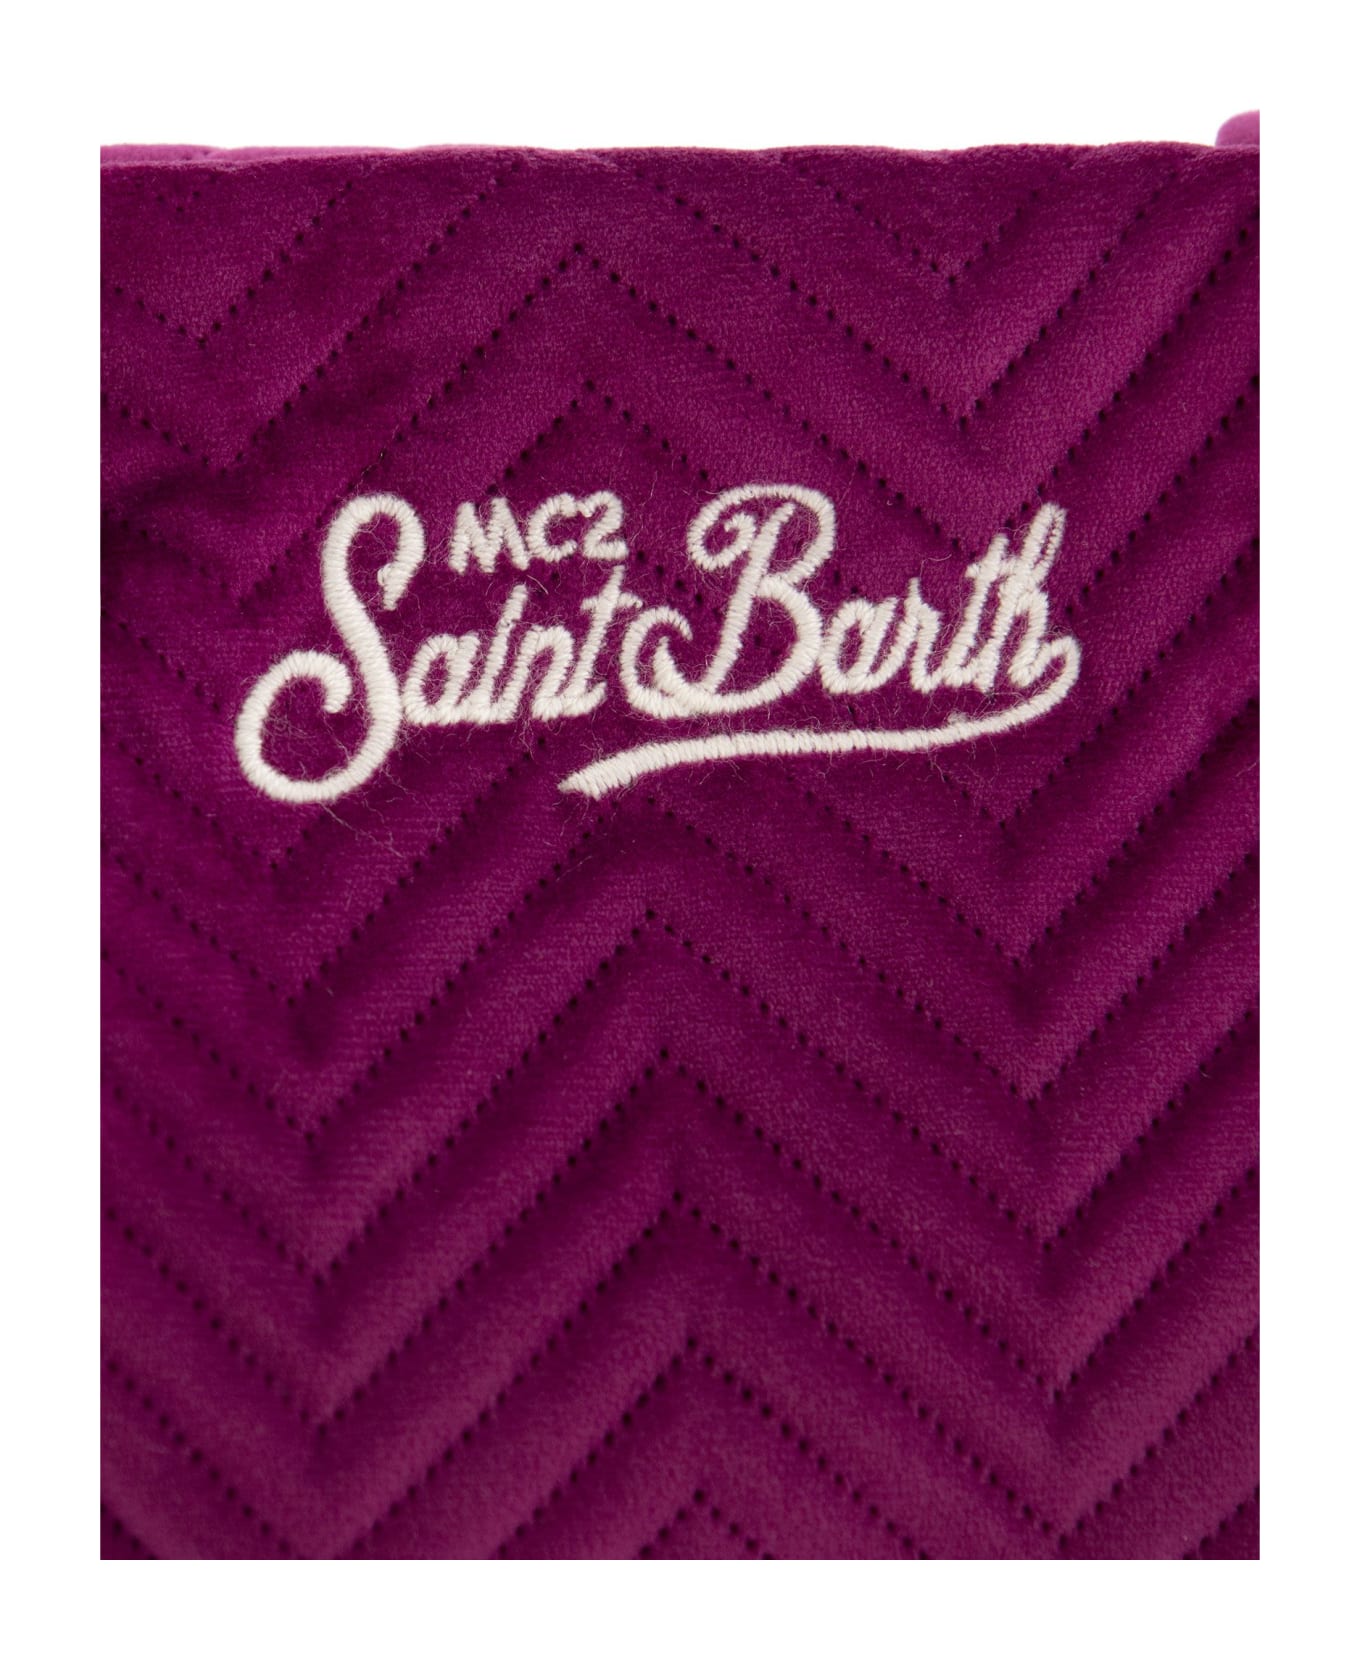 MC2 Saint Barth Quilted Velvet Clutch Bag - Purple クラッチバッグ